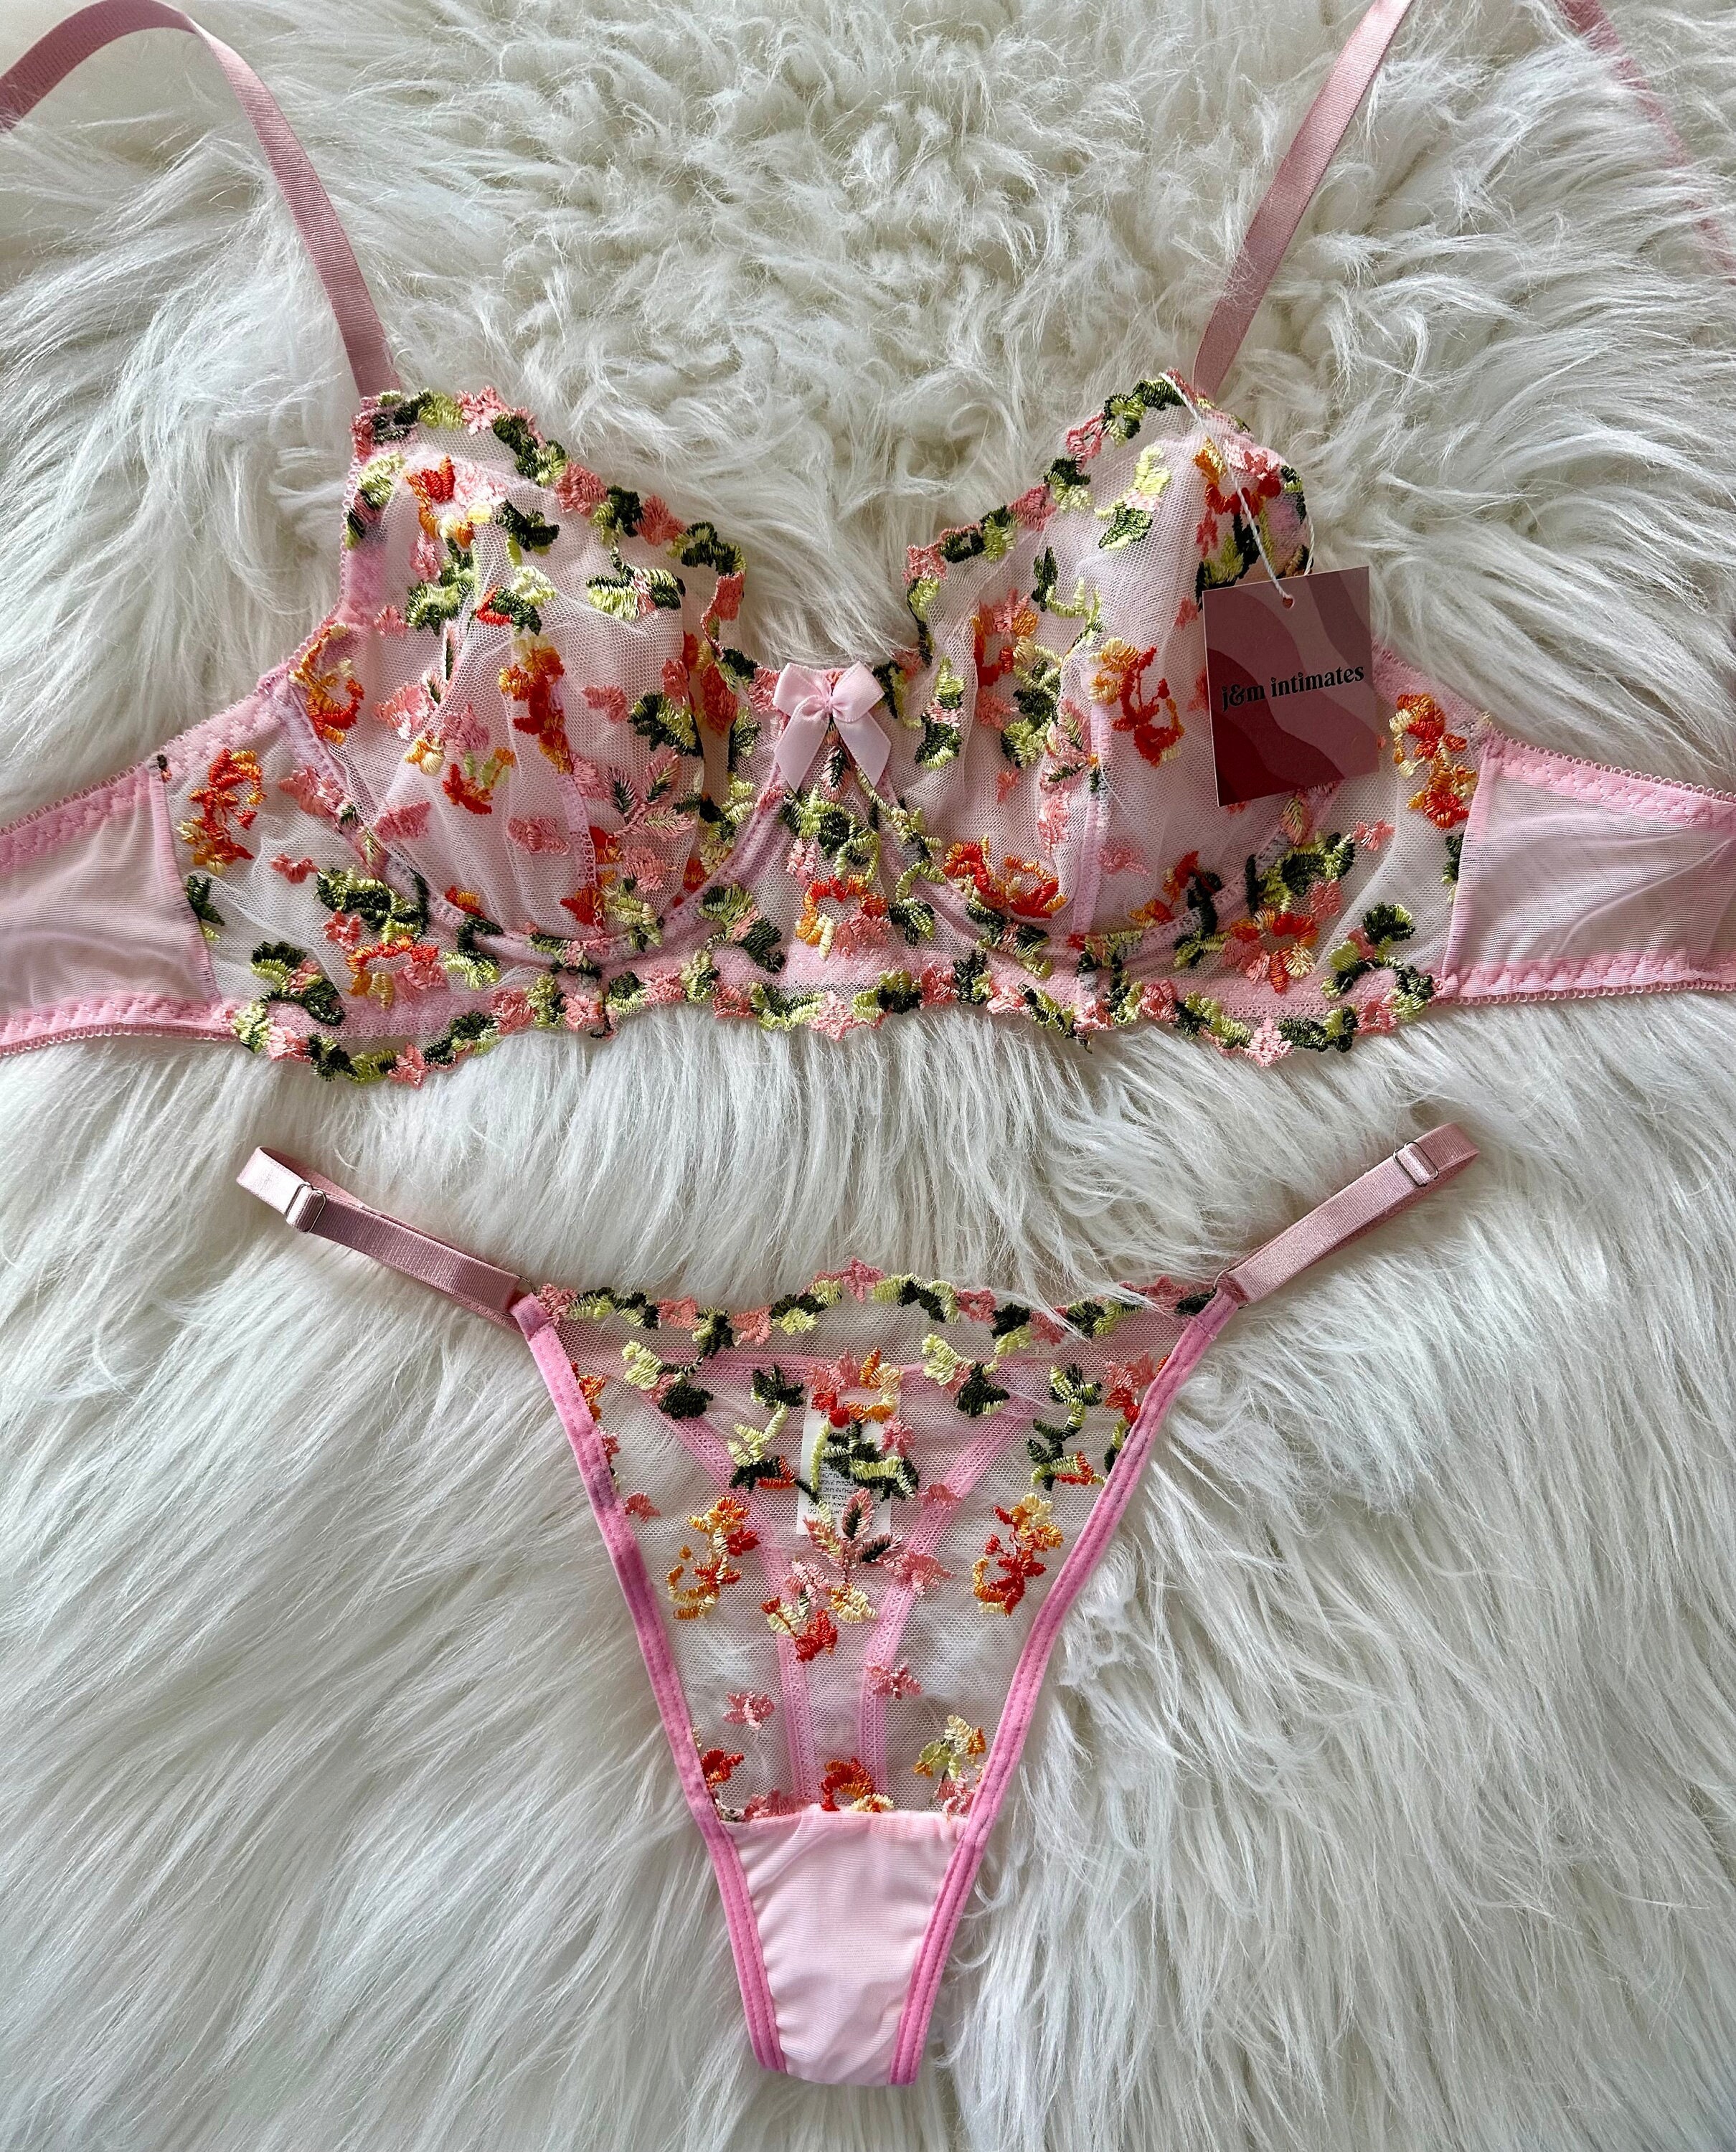 CUI Lace Lingerie Bra And Panty for Women Sexy Lingerie Mesh Lingerie Set (Size:80C/36C,Color:Pink) : : Fashion